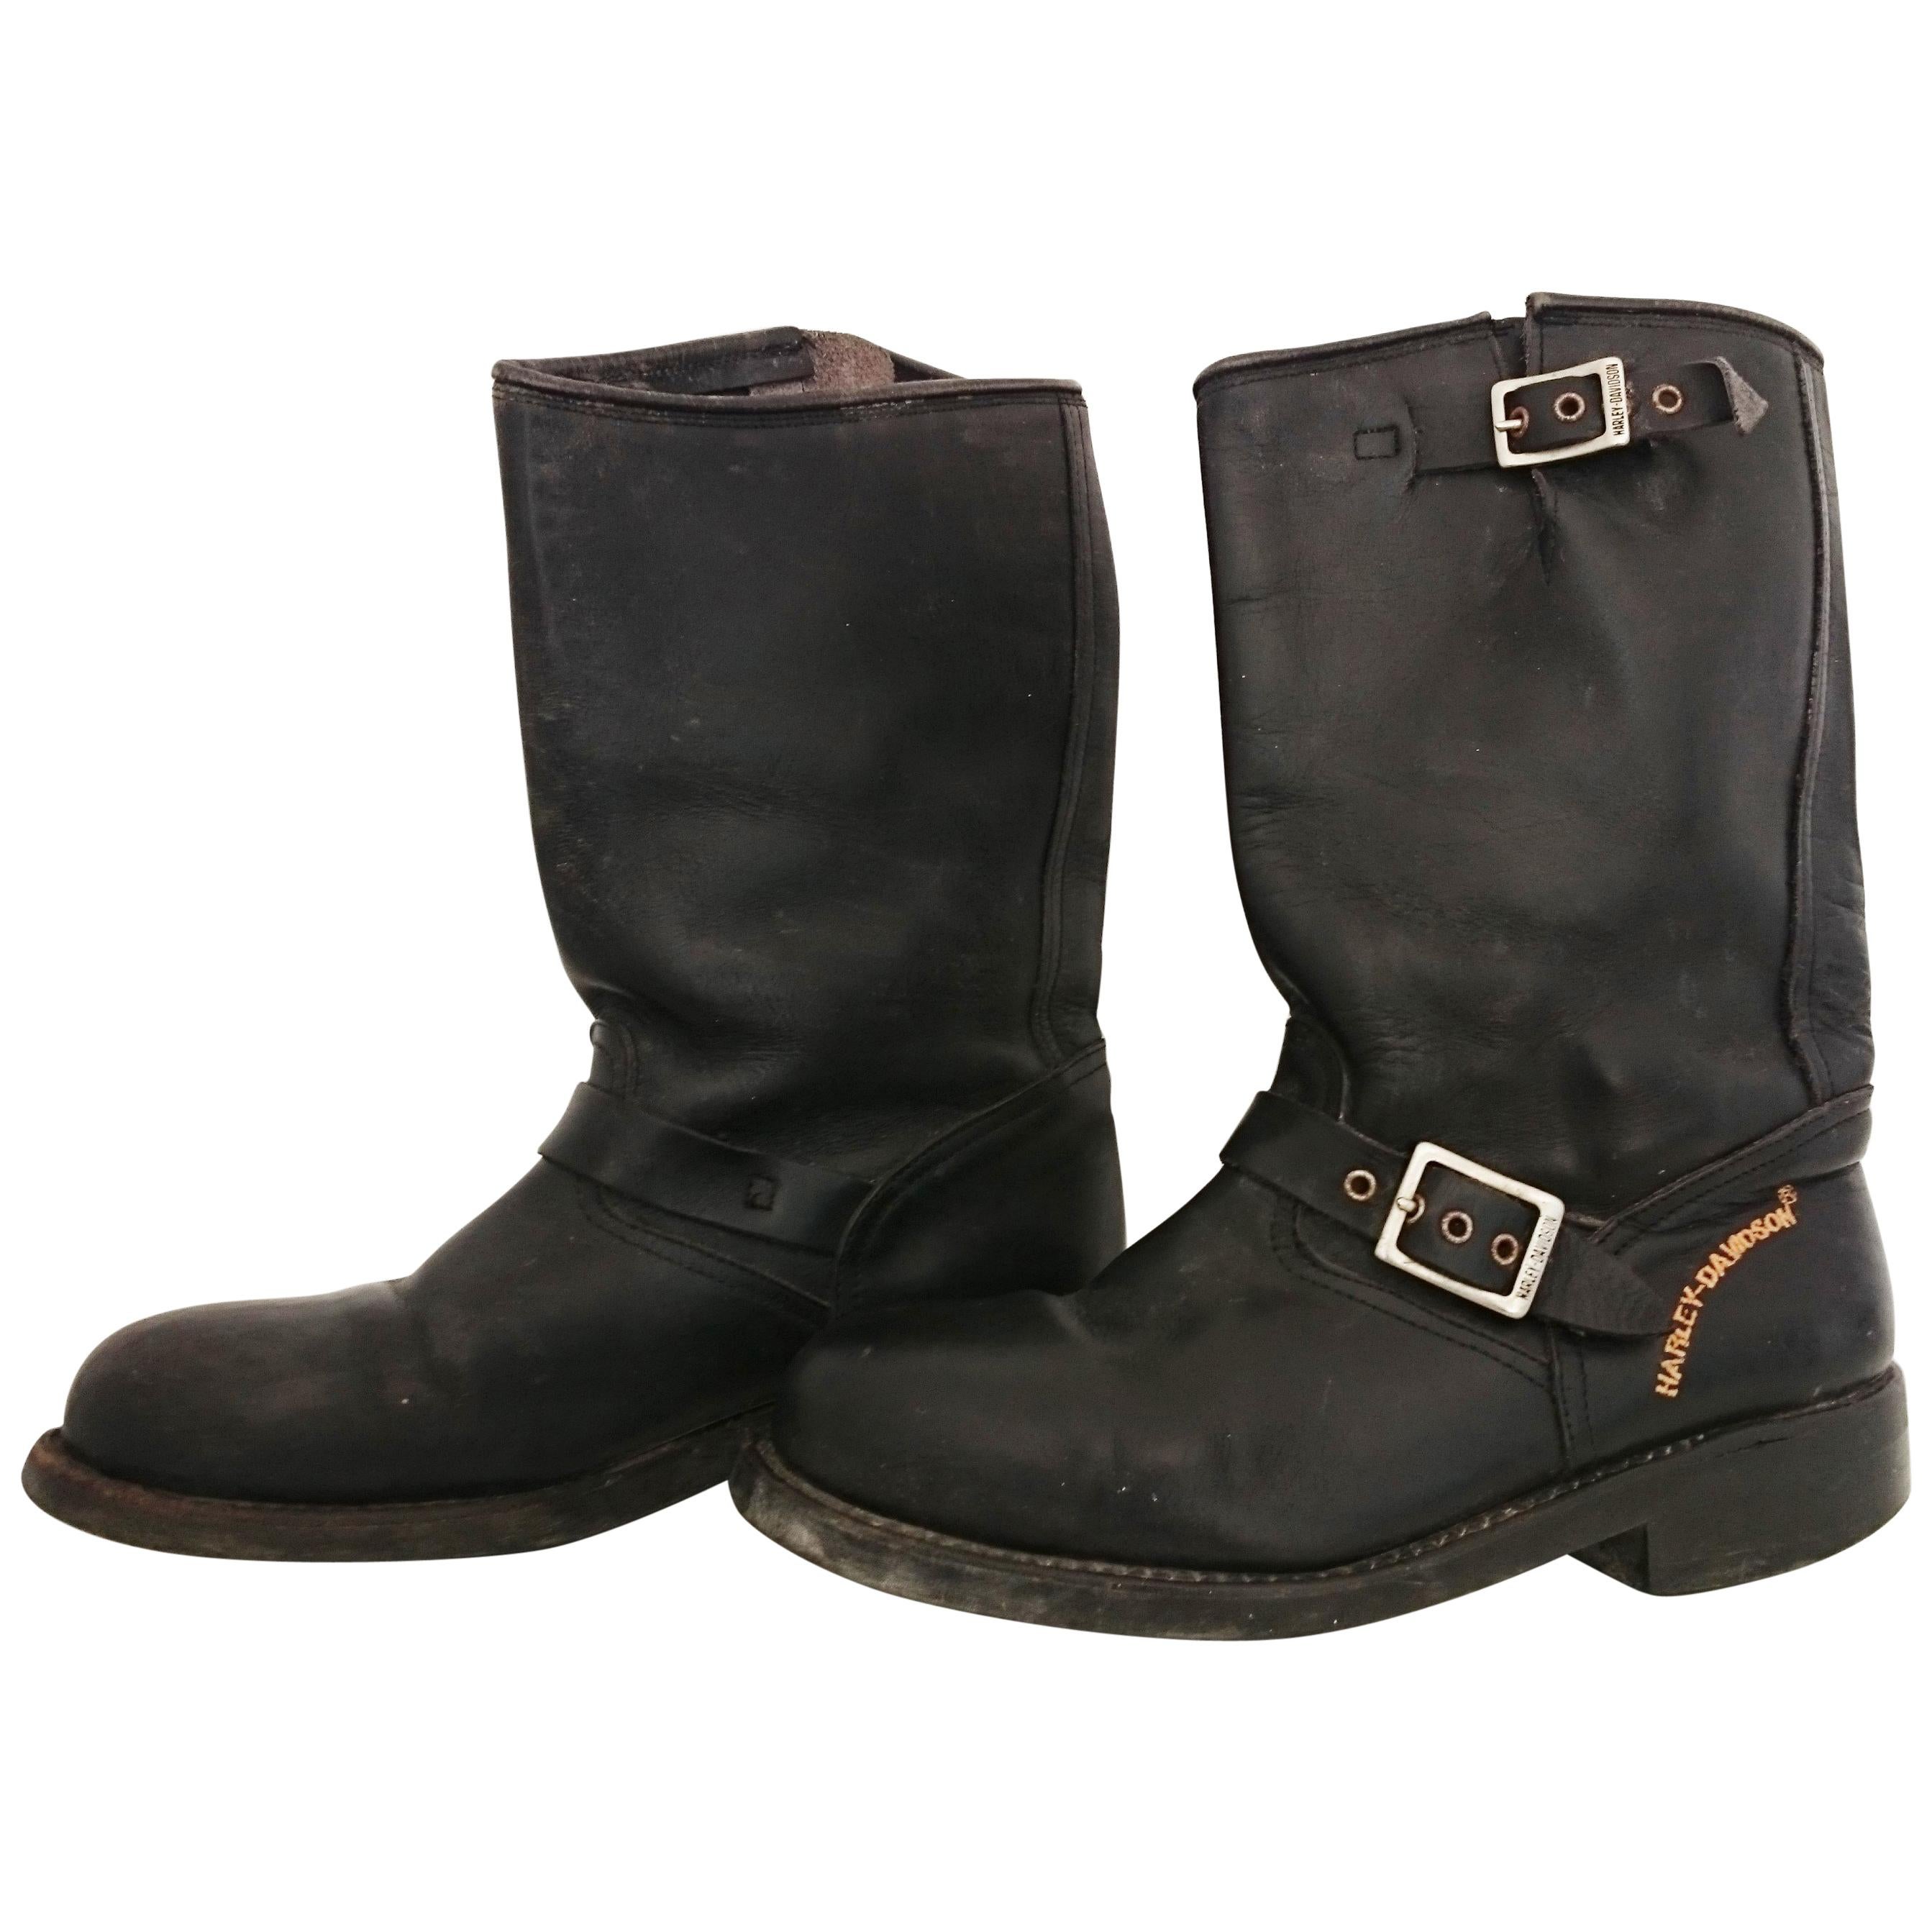 HARLEY DAVIDSON Black Leather Boots. Size 8 (UK)